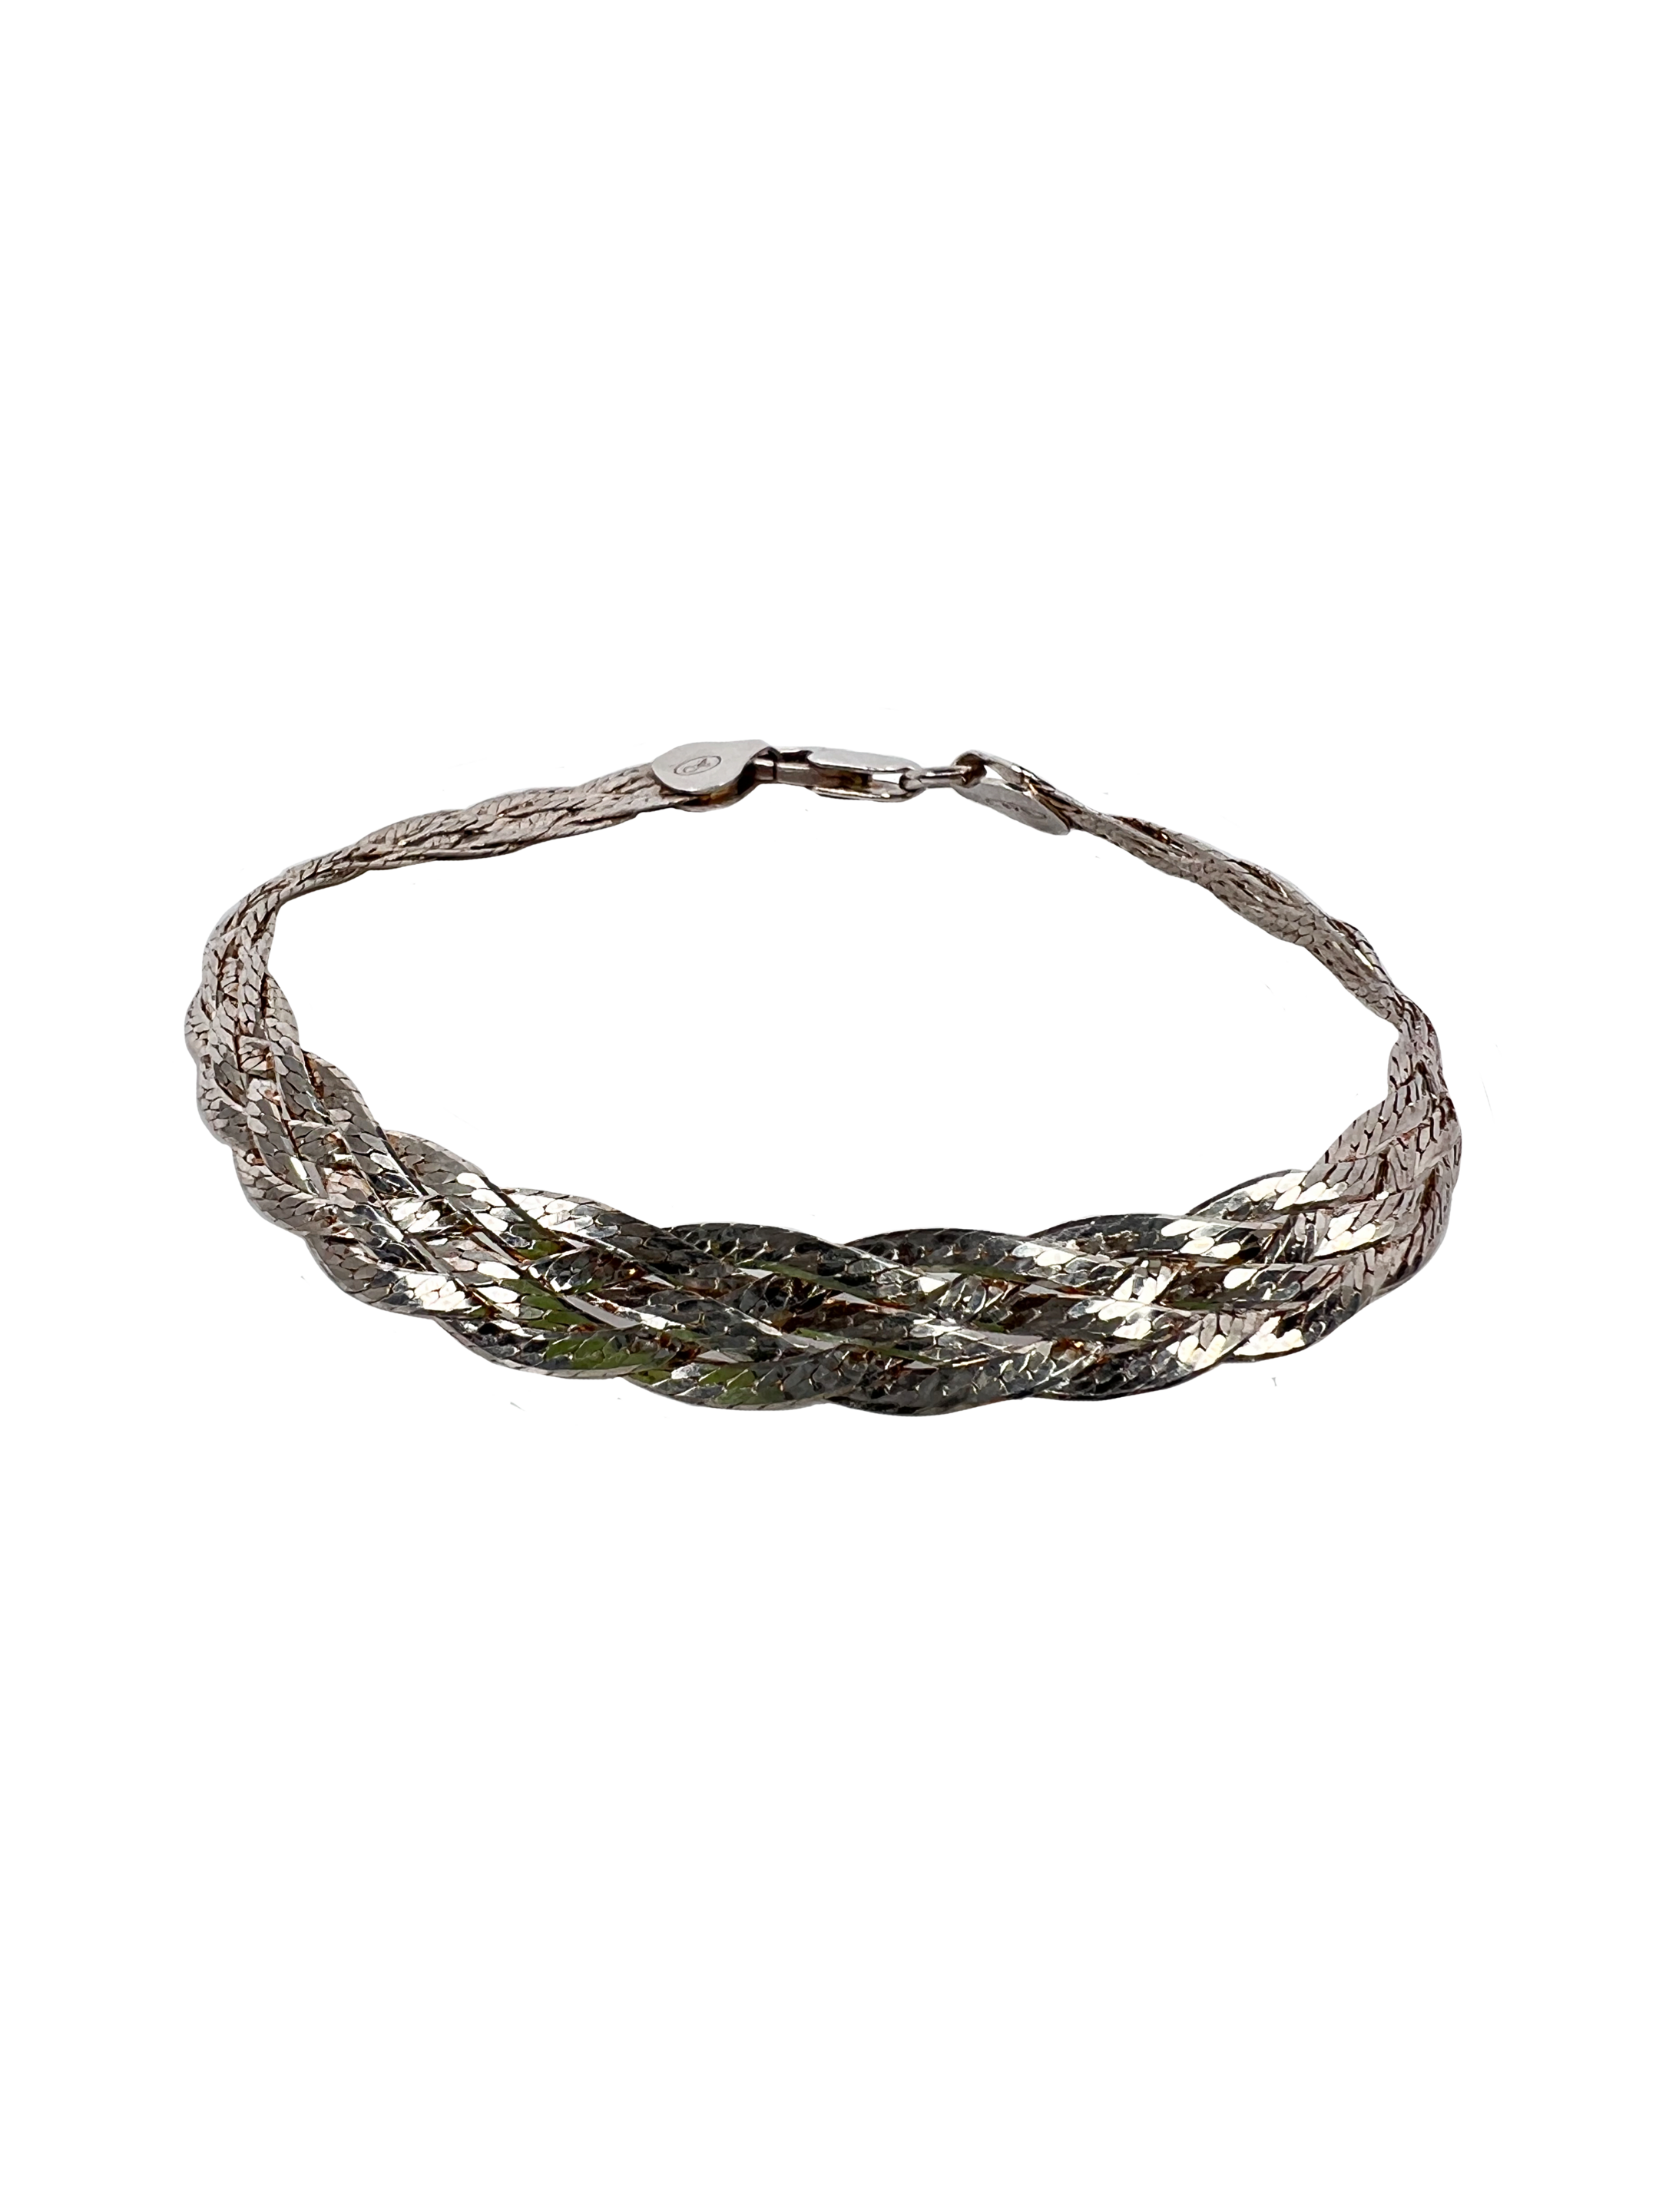 Silver bracelet knitted pattern